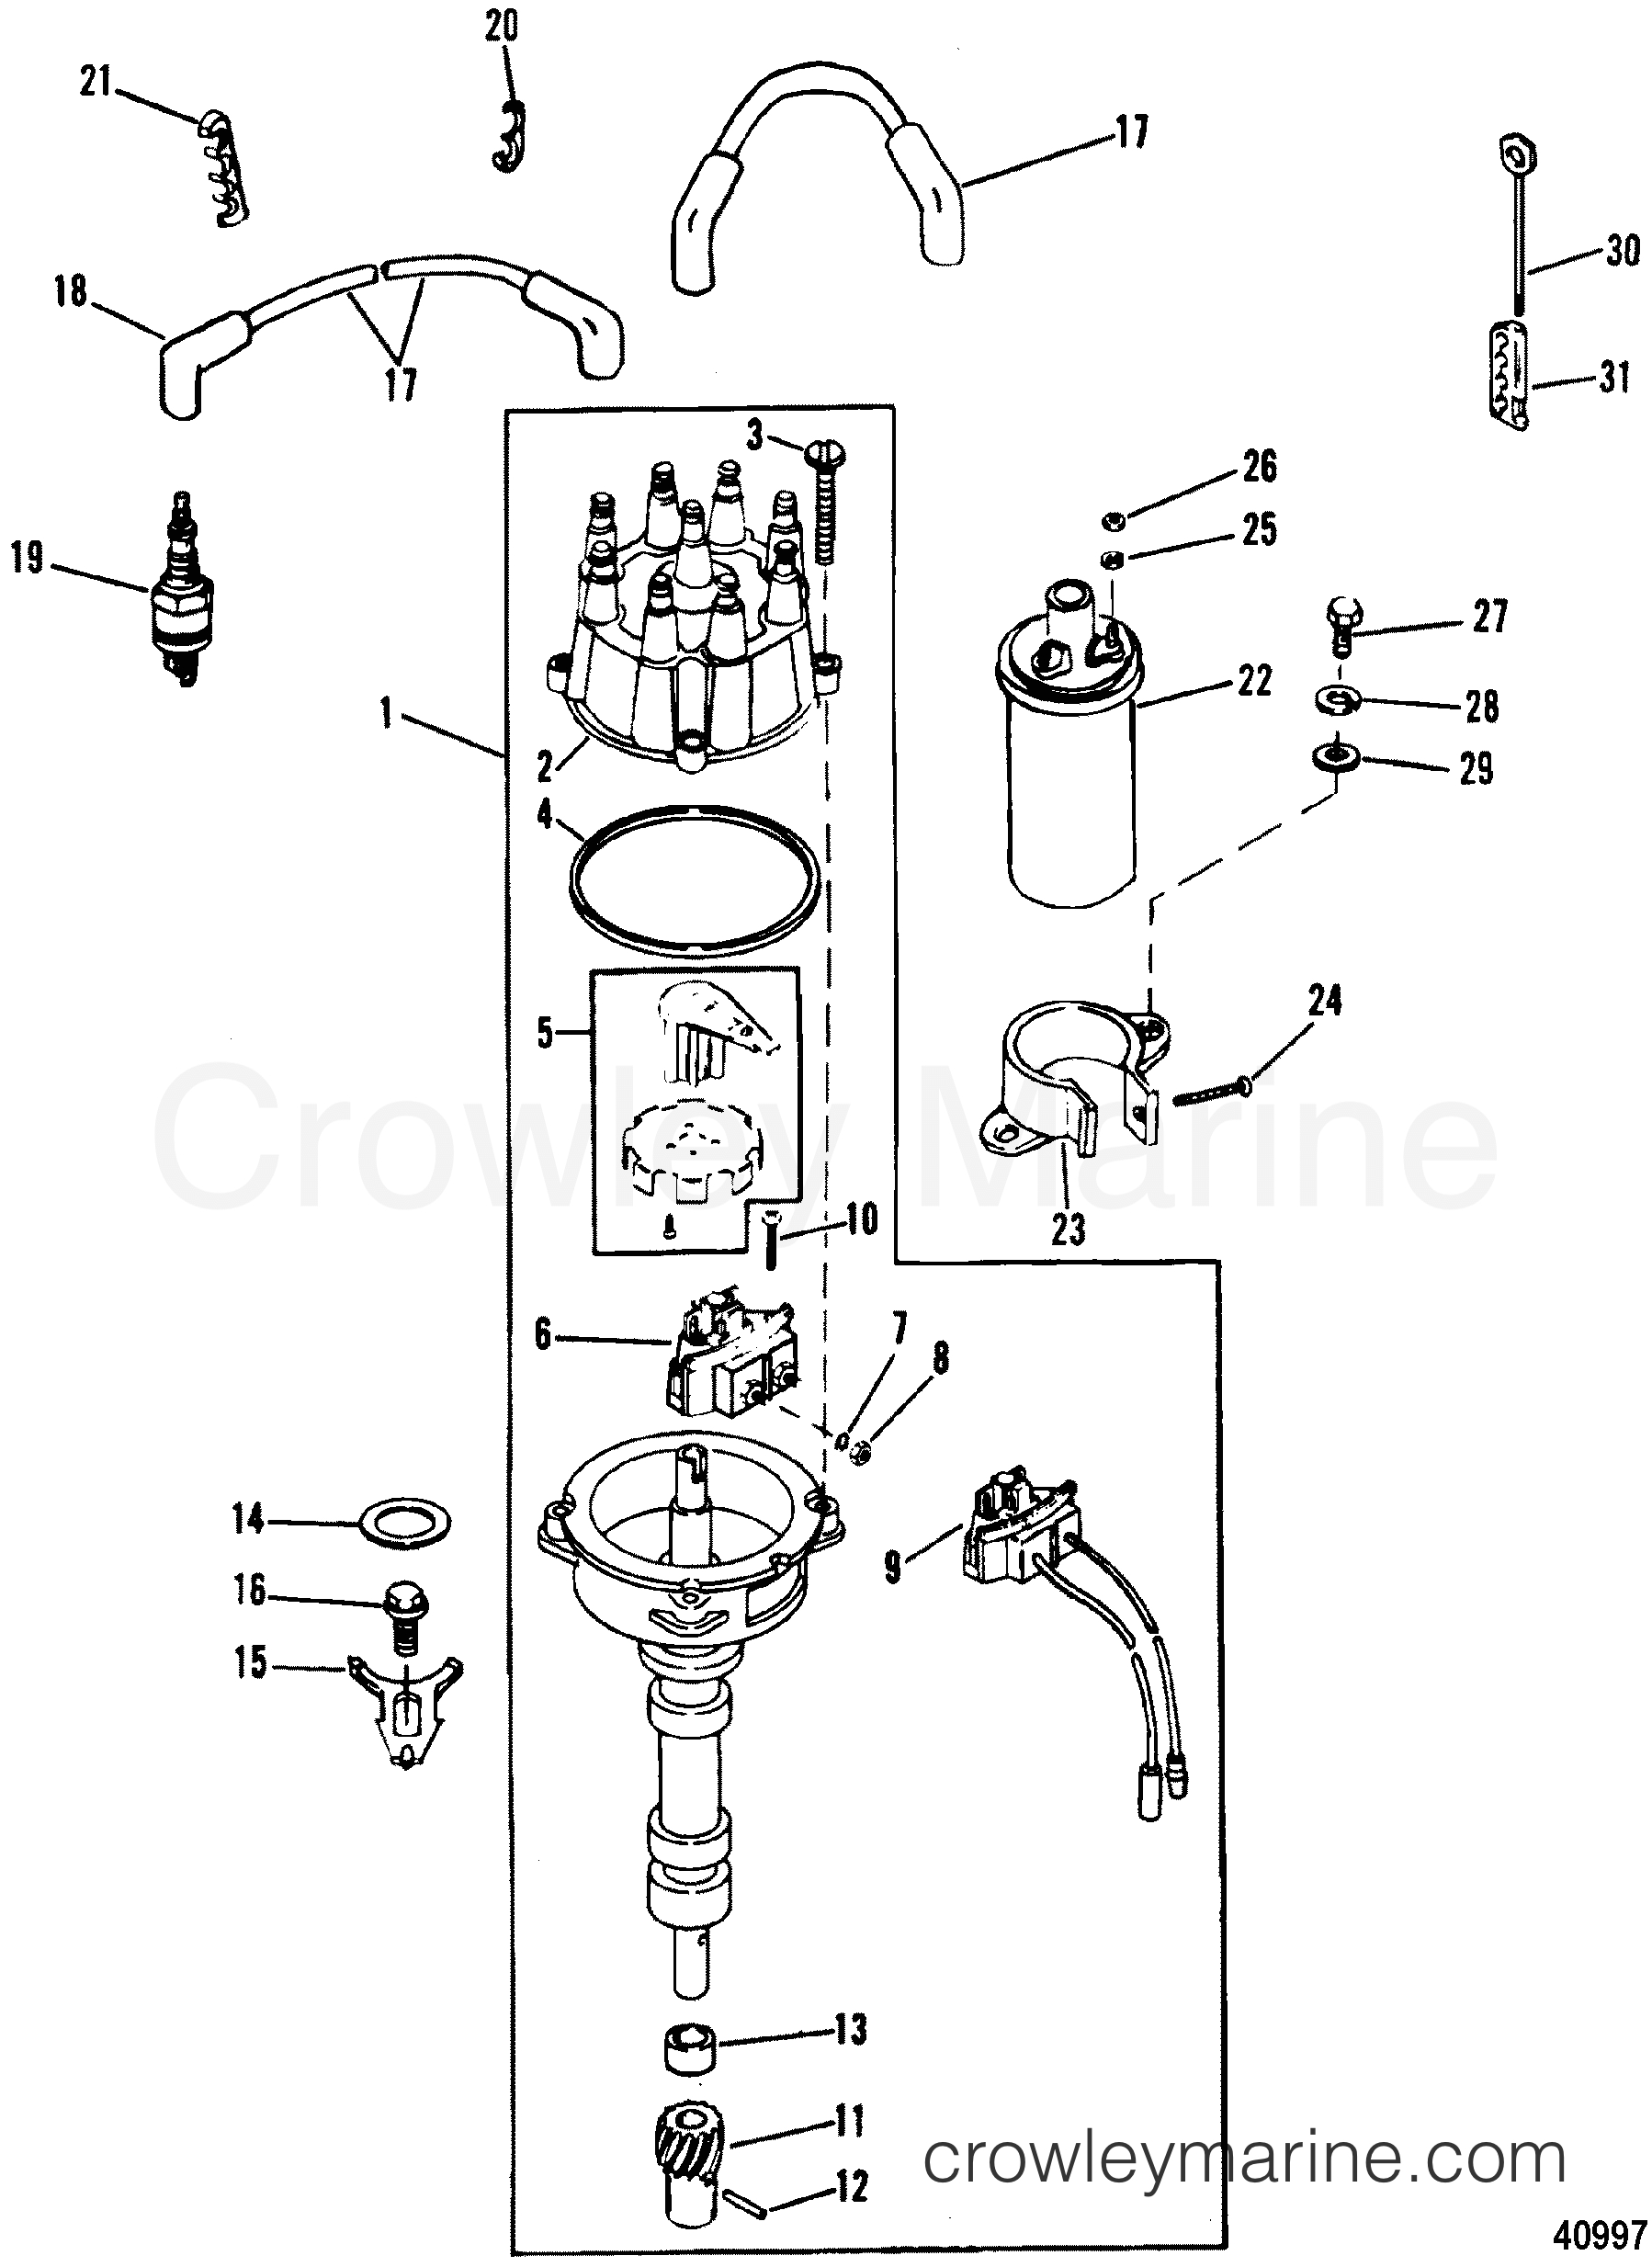 distributor amp ignition components thunderbolt iv ignition